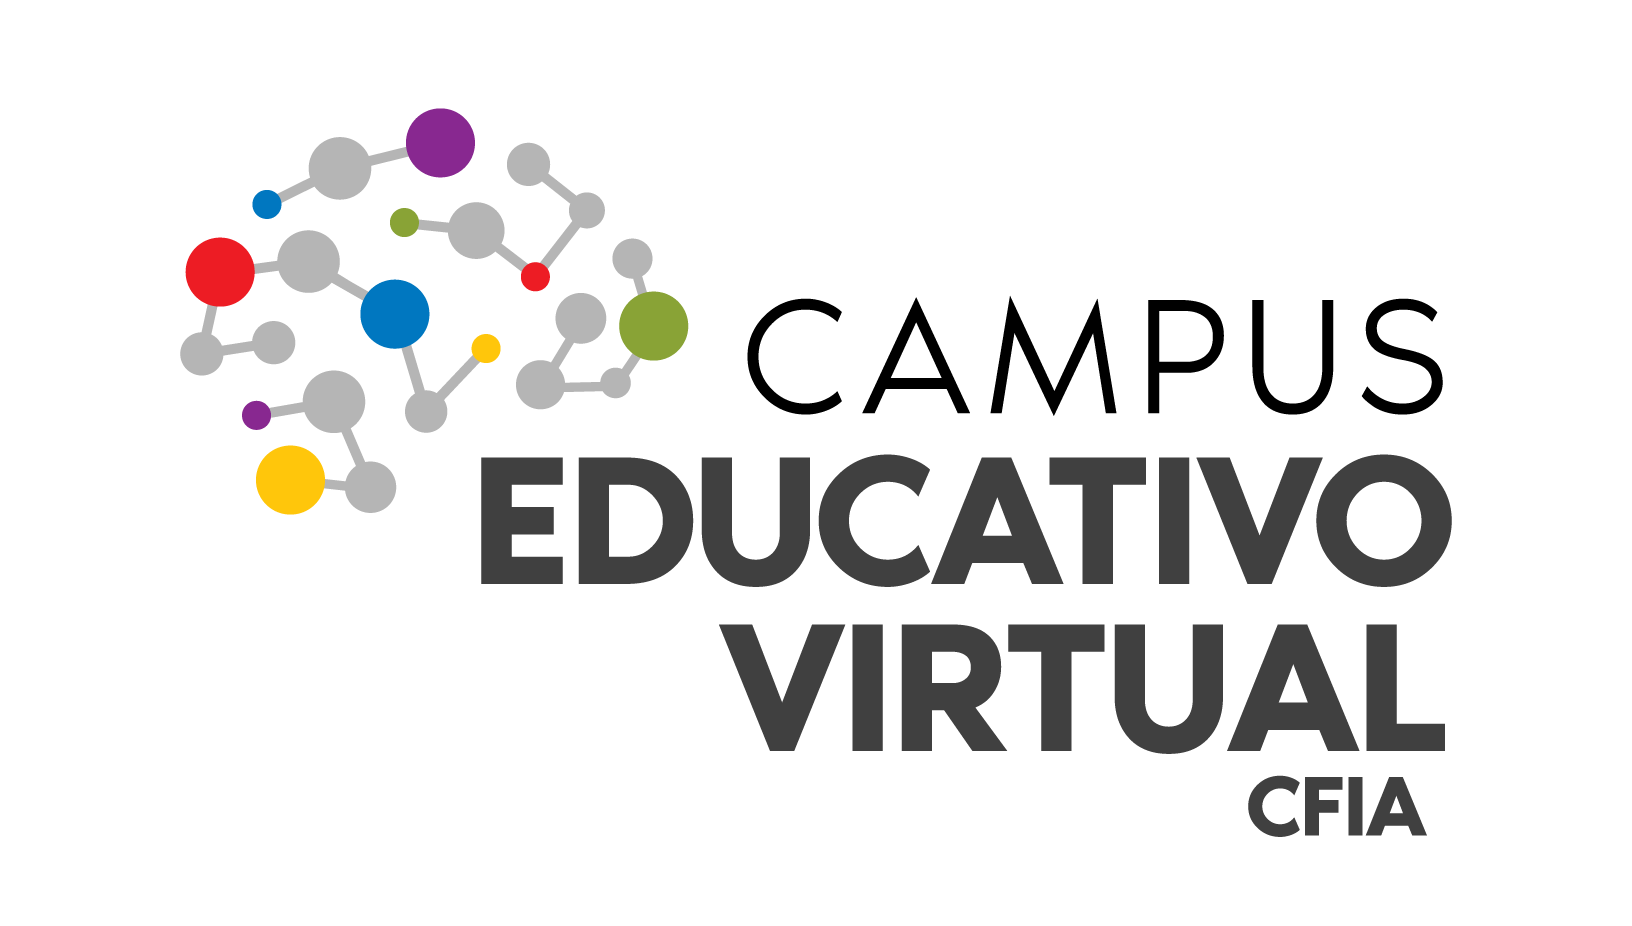 Campus Educativo Virtual - CFIA